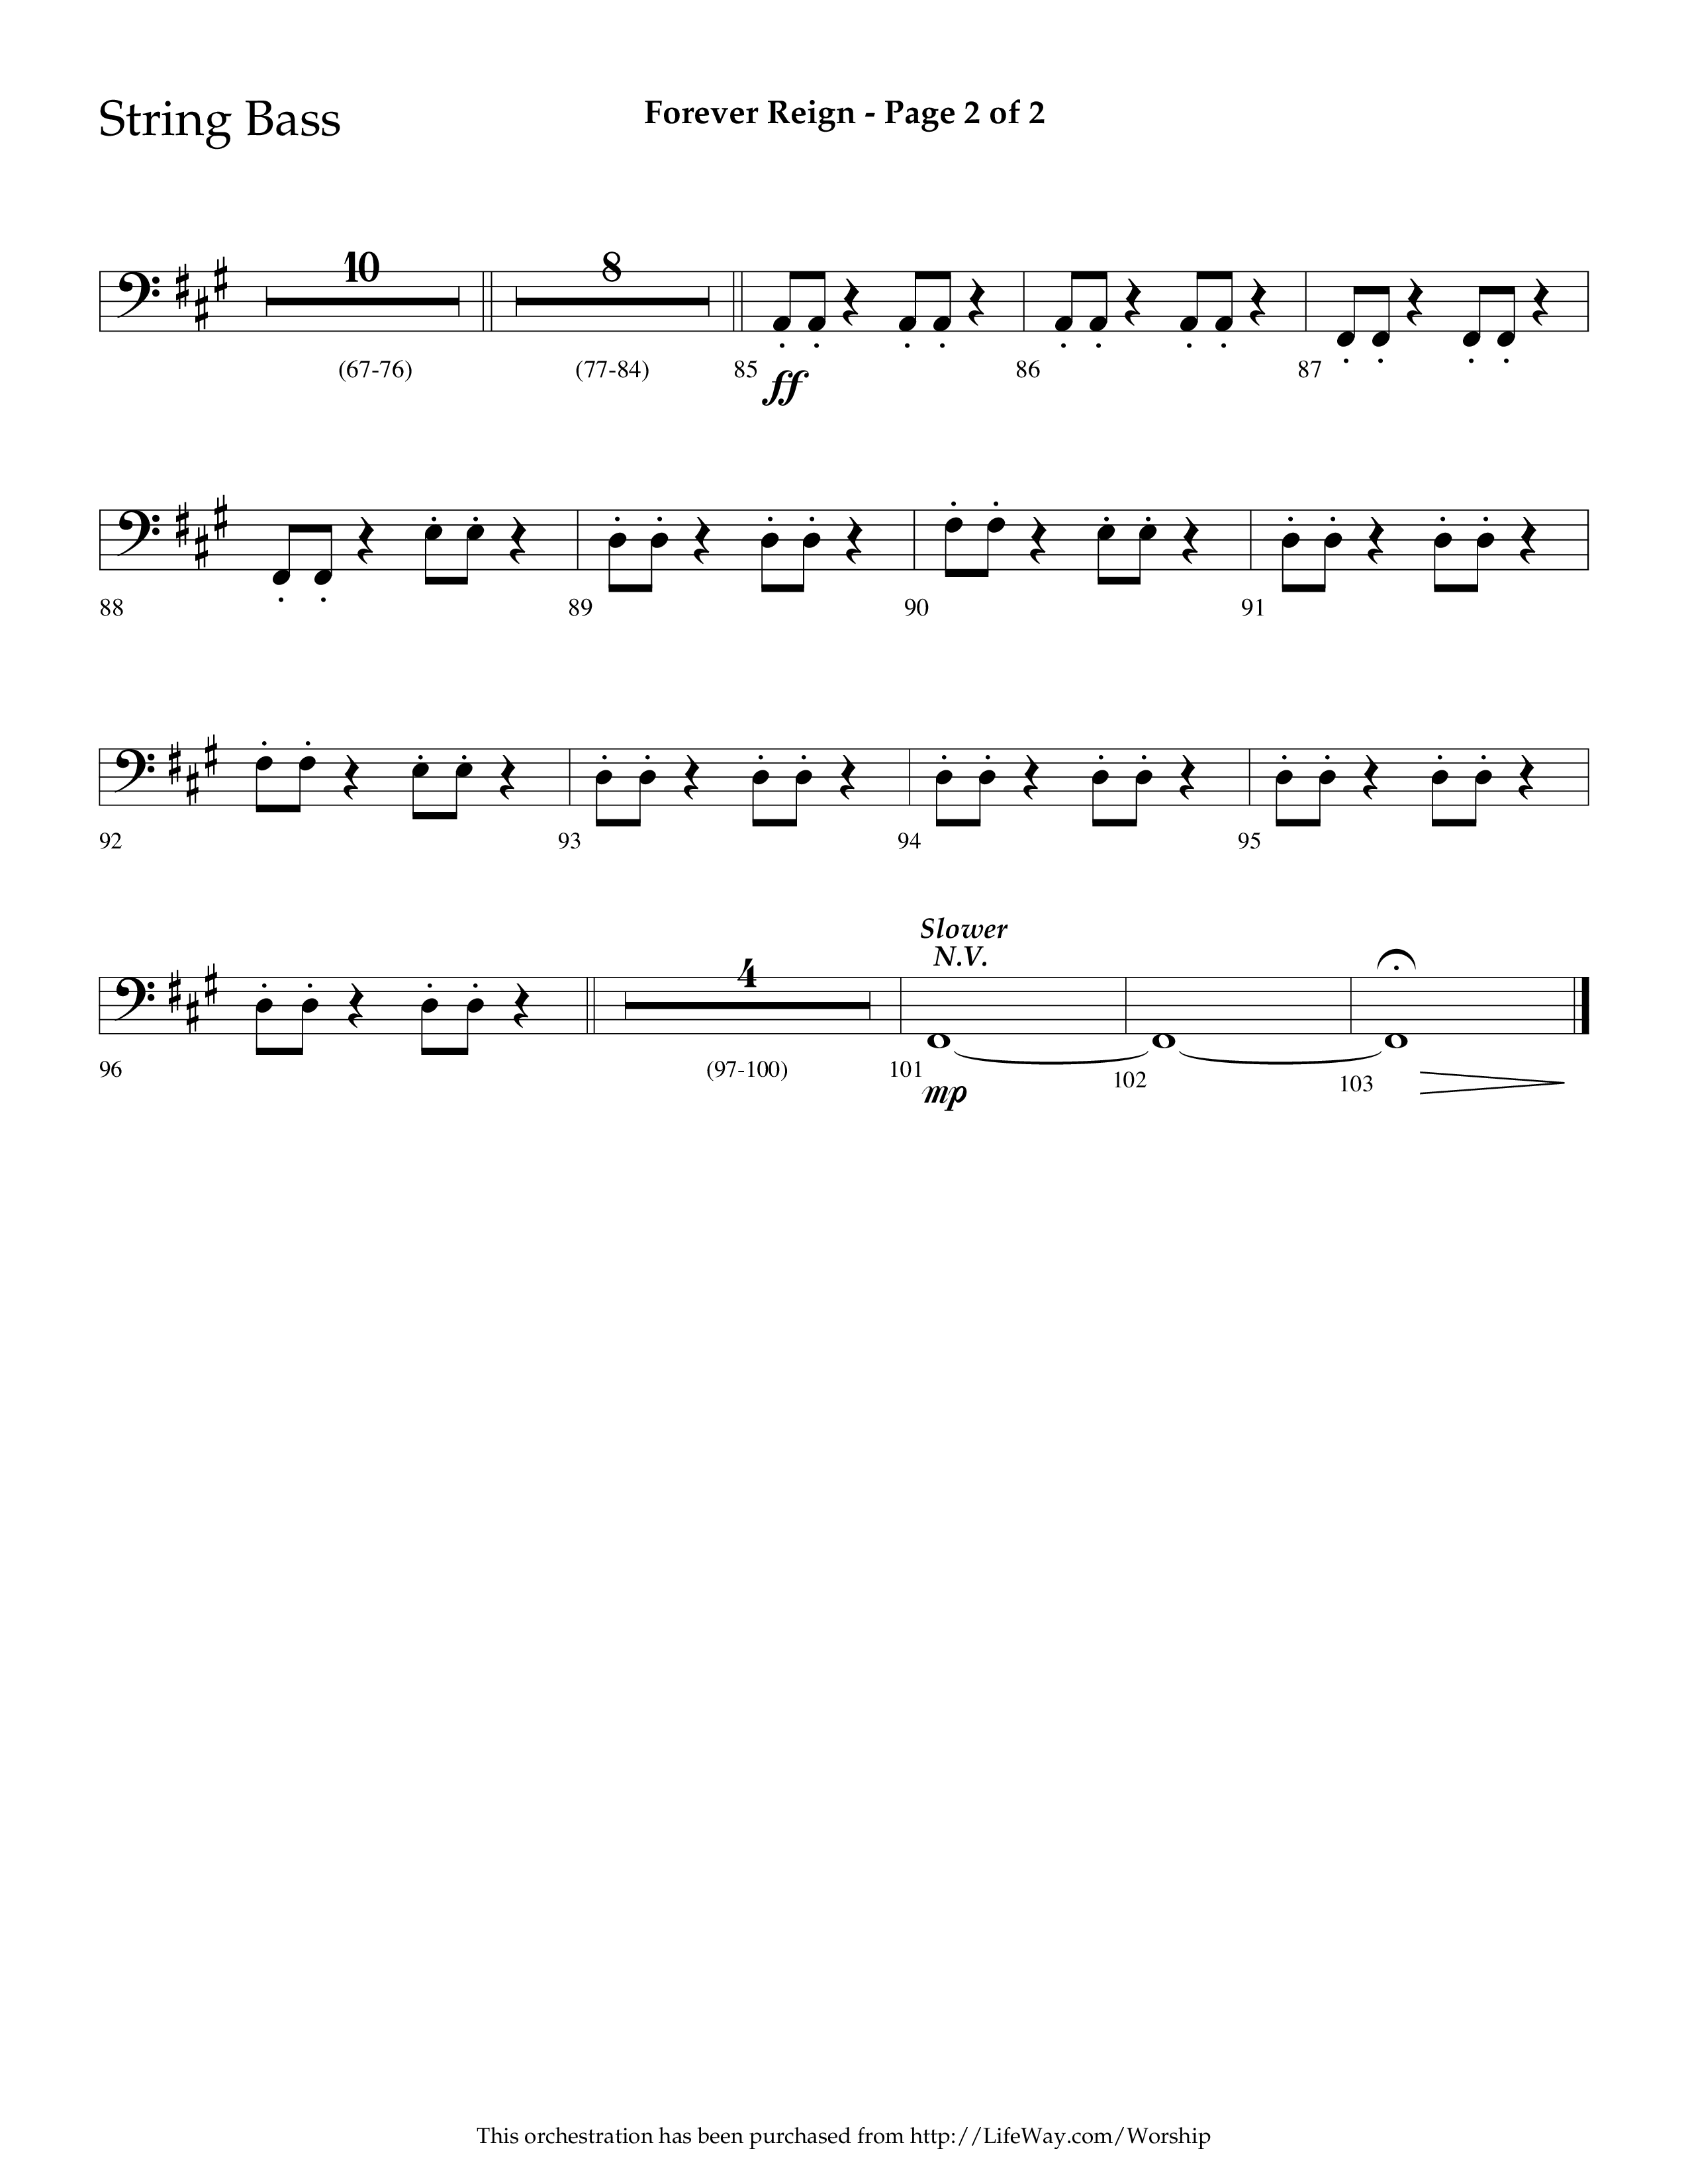 Forever Reign (Choral Anthem SATB) String Bass (Lifeway Choral / Arr. Dave Williamson)